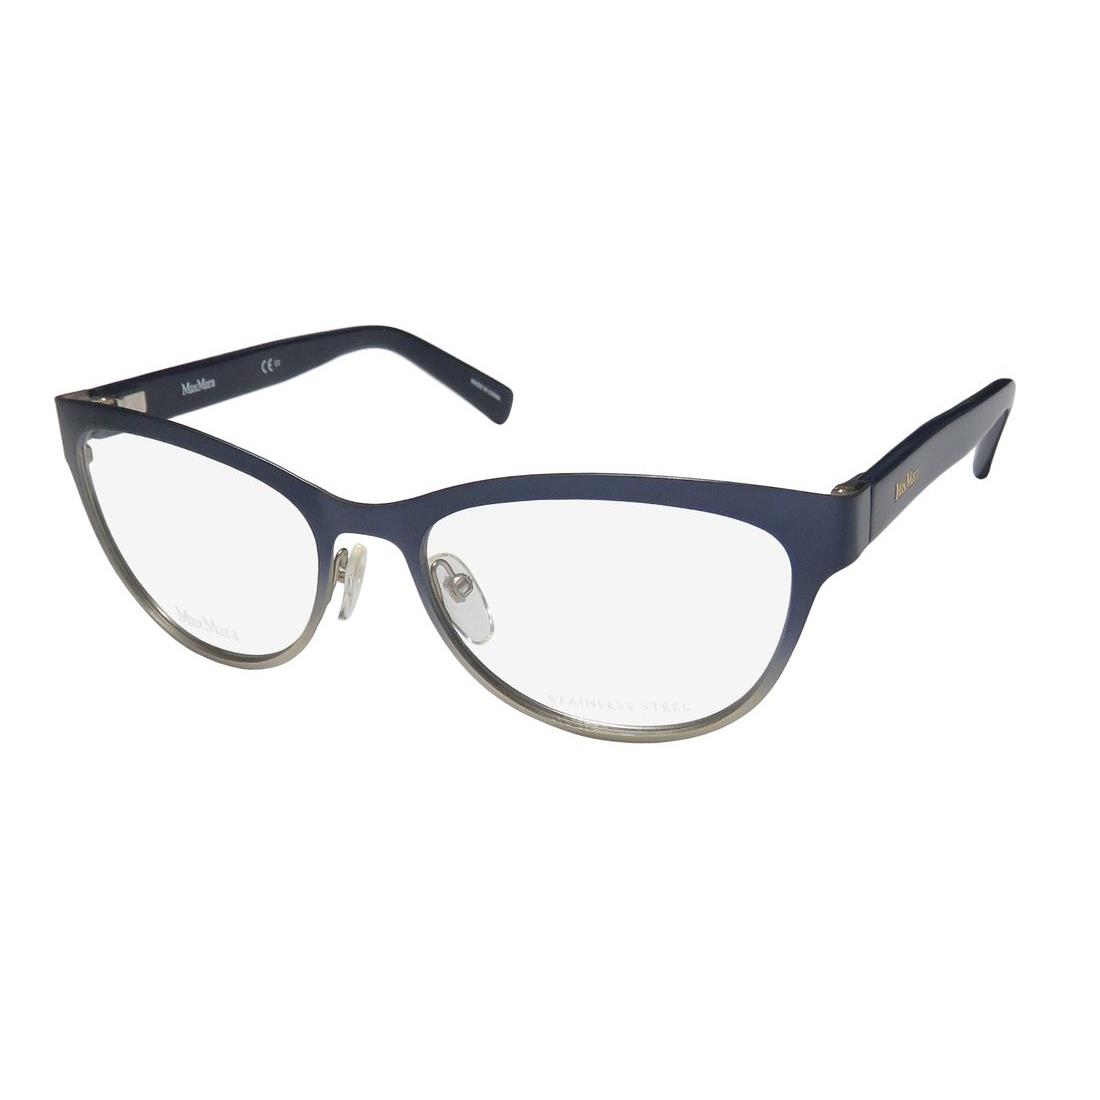 Max Mara 1241 Prestigious Designer Upscale Cat Eye Eyeglass Frame/eyewear Blue Light Gold